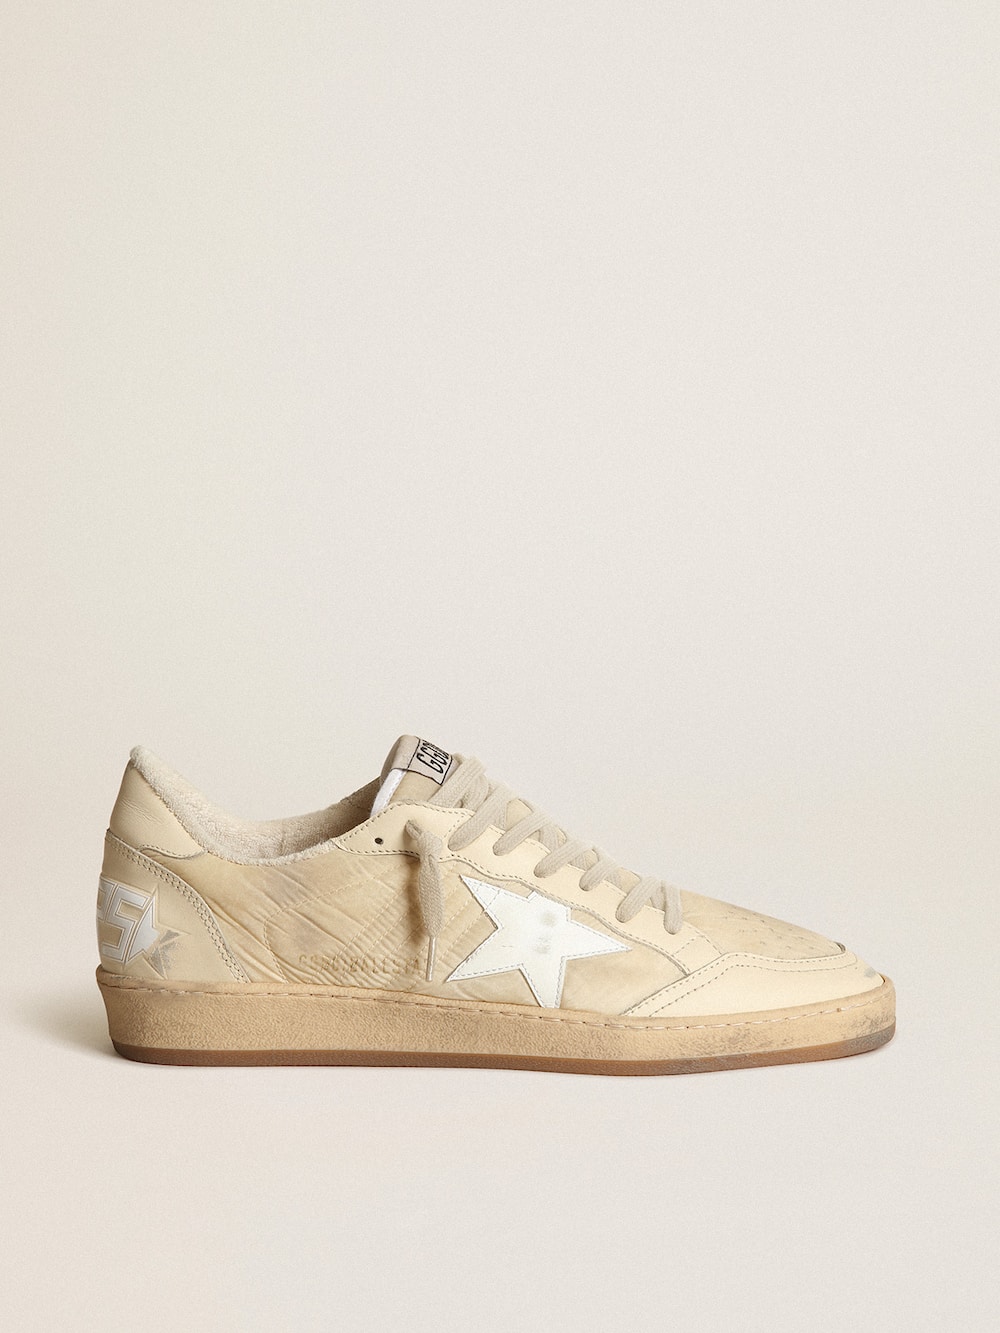 Golden Goose - Women's Ball Star in milk-white nylon with white star and heel tab in 